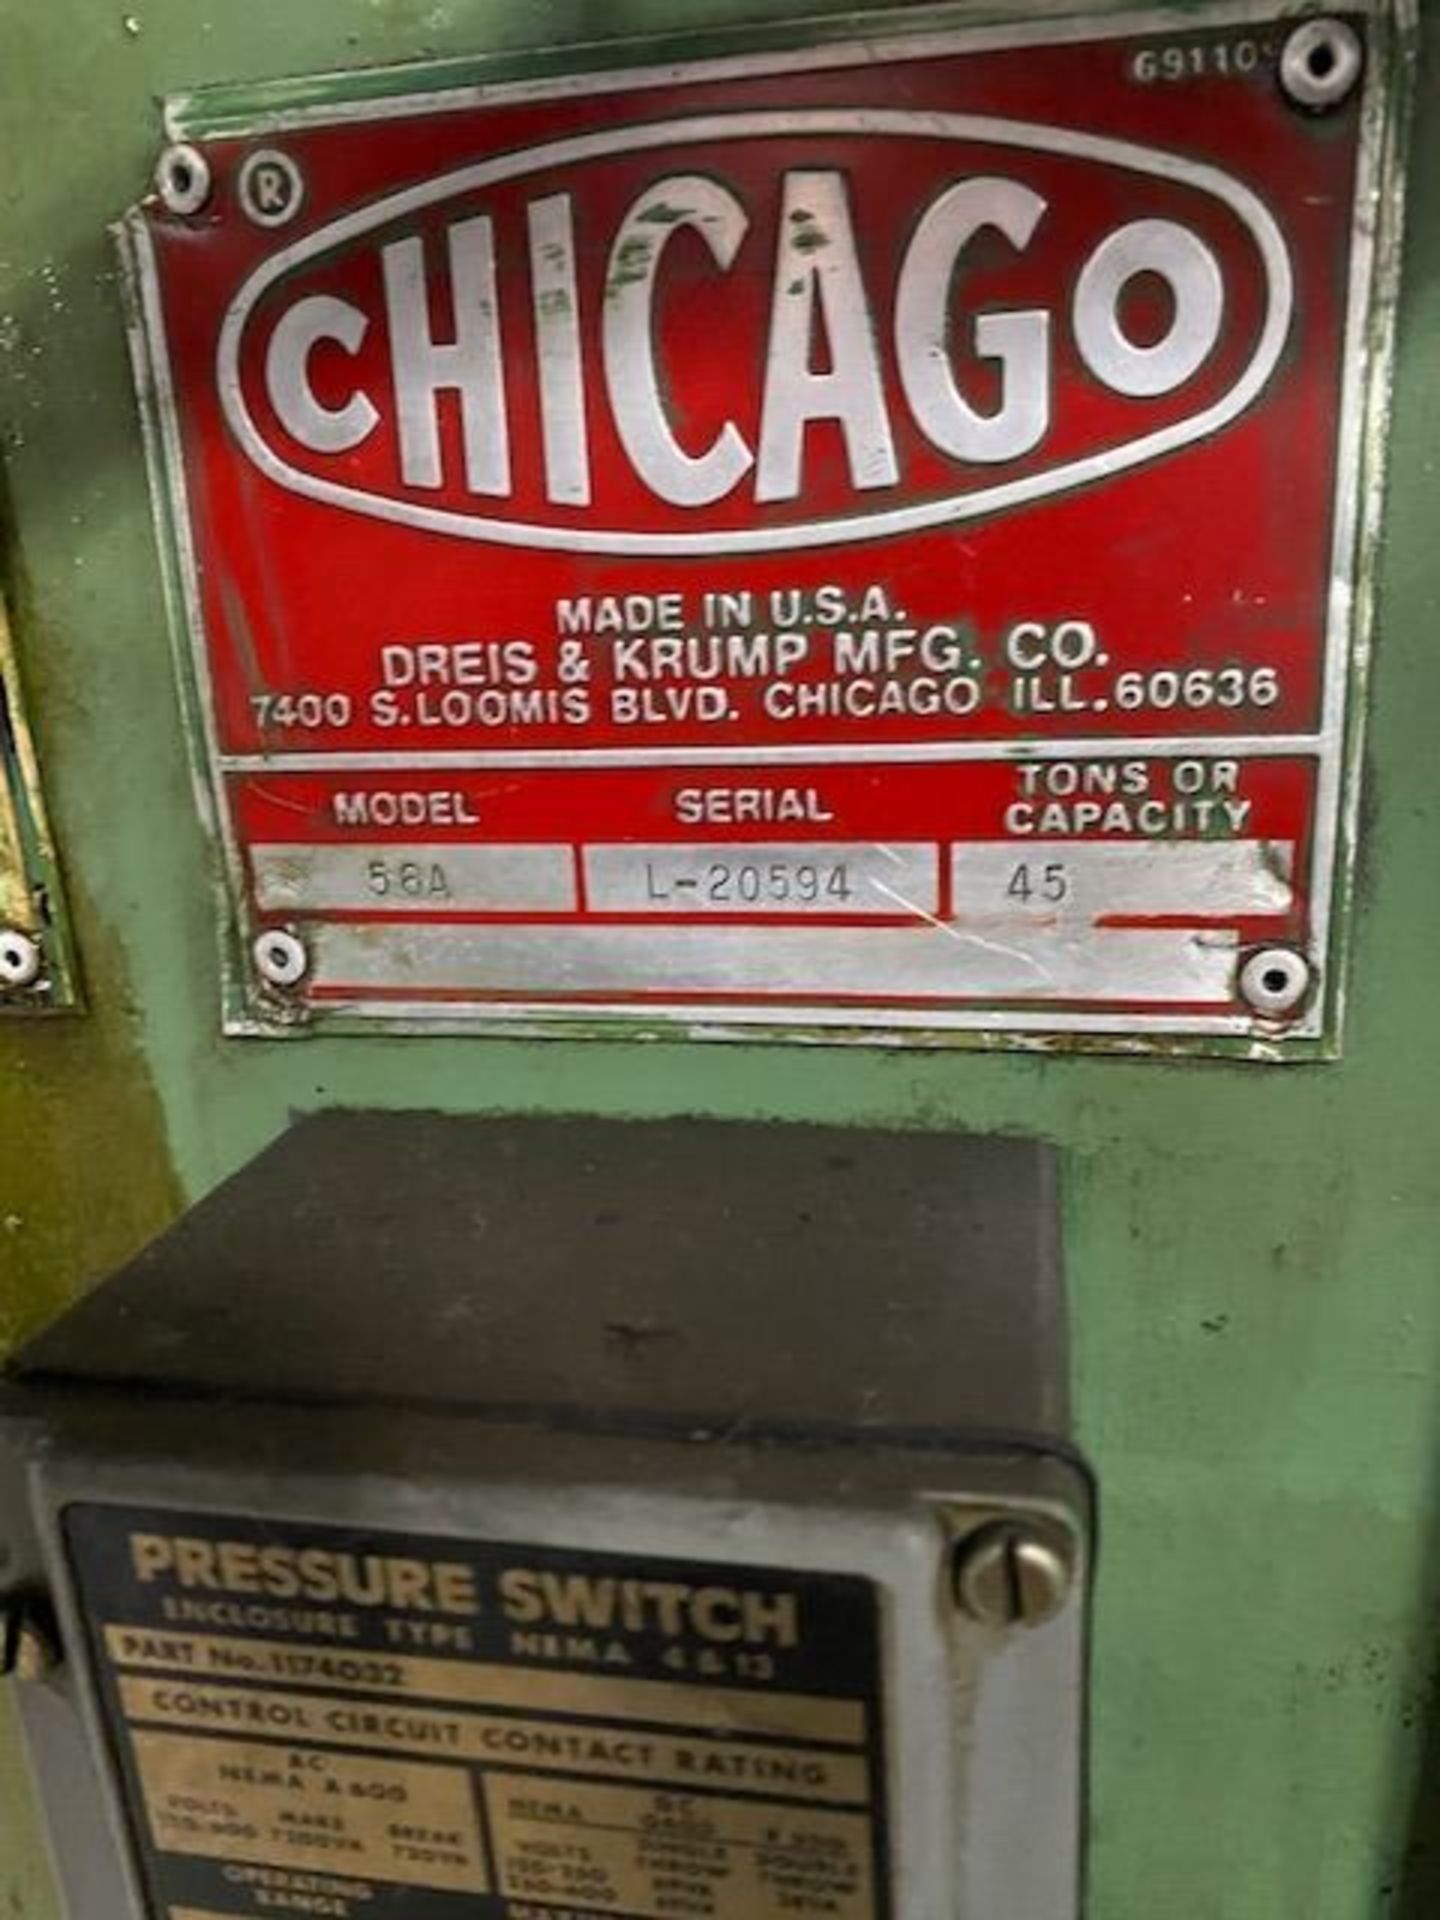 45 Ton Chicago Press Brake Model 56a - Image 4 of 4